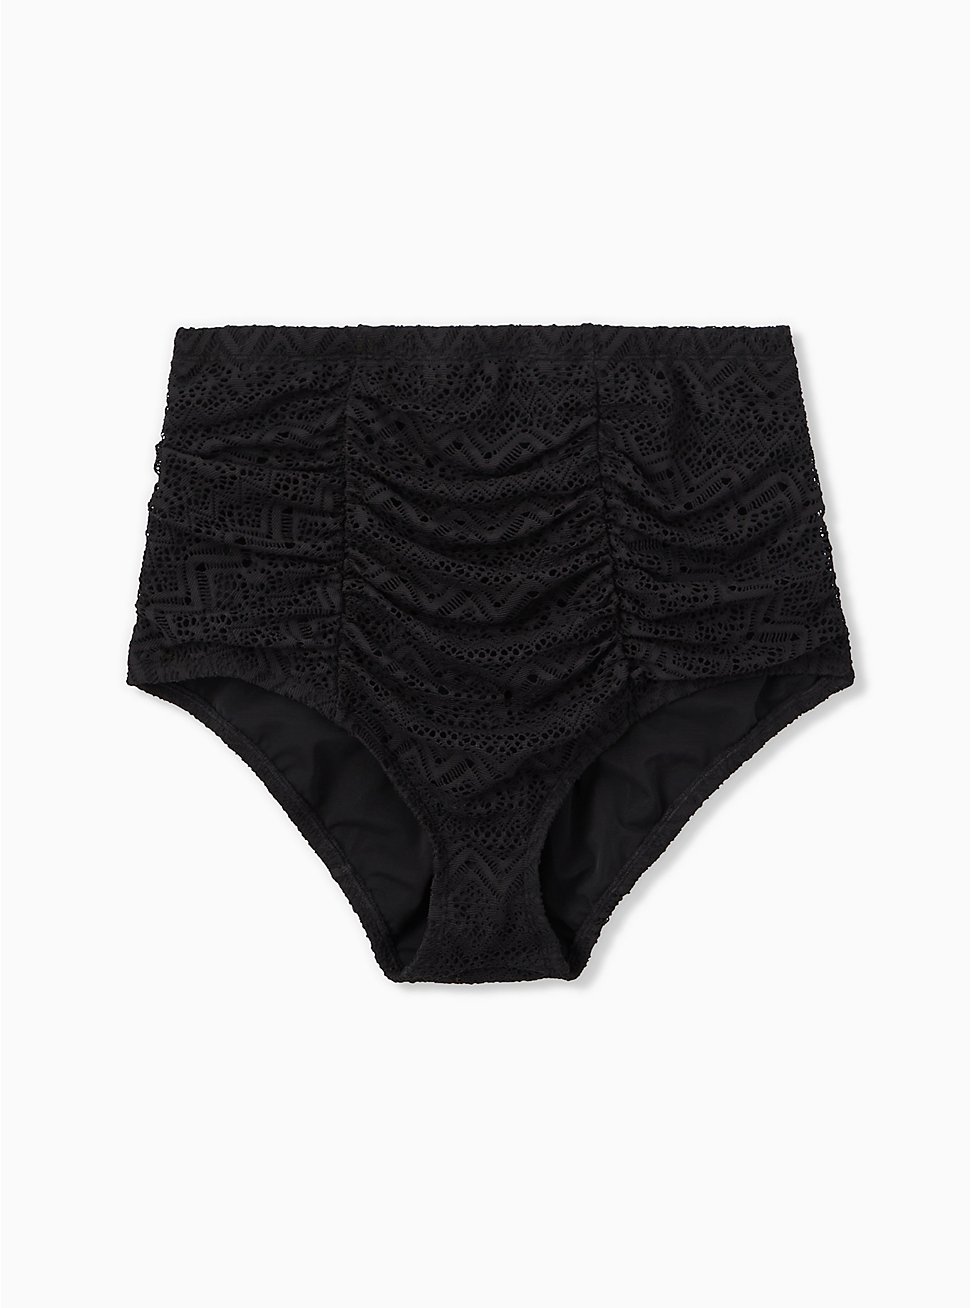 High-Rise Ruched Crochet Swim Bottom, DEEP BLACK, hi-res